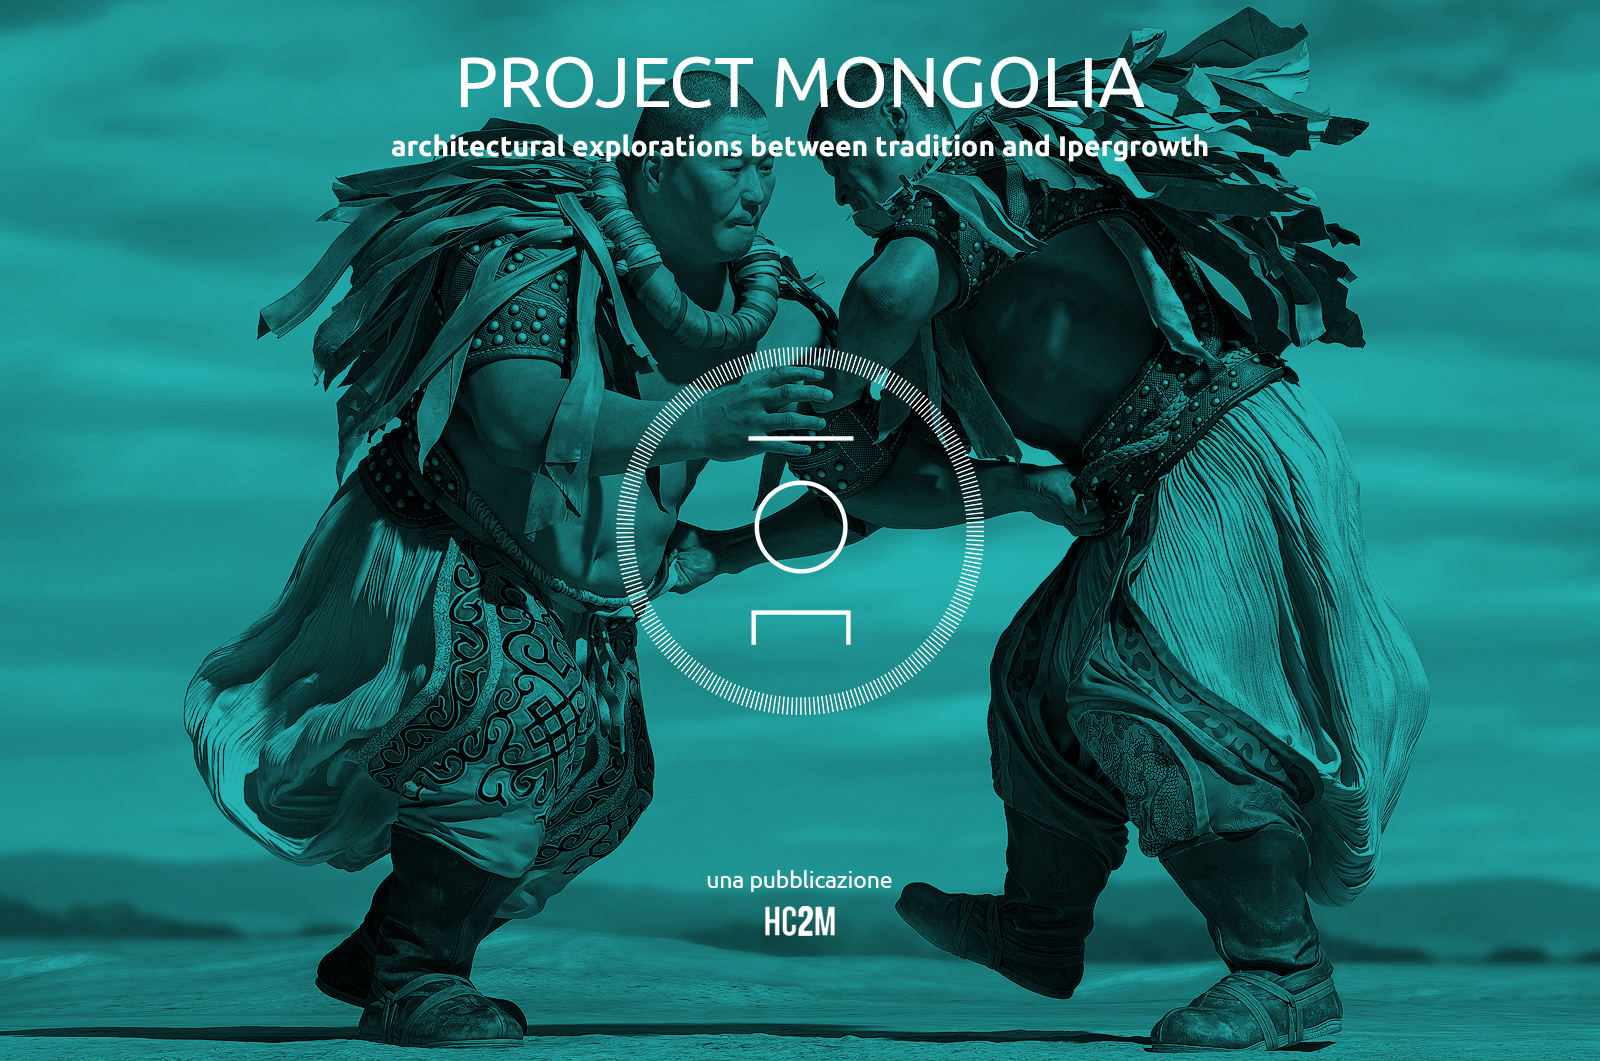 PROJECT MONGOLIA